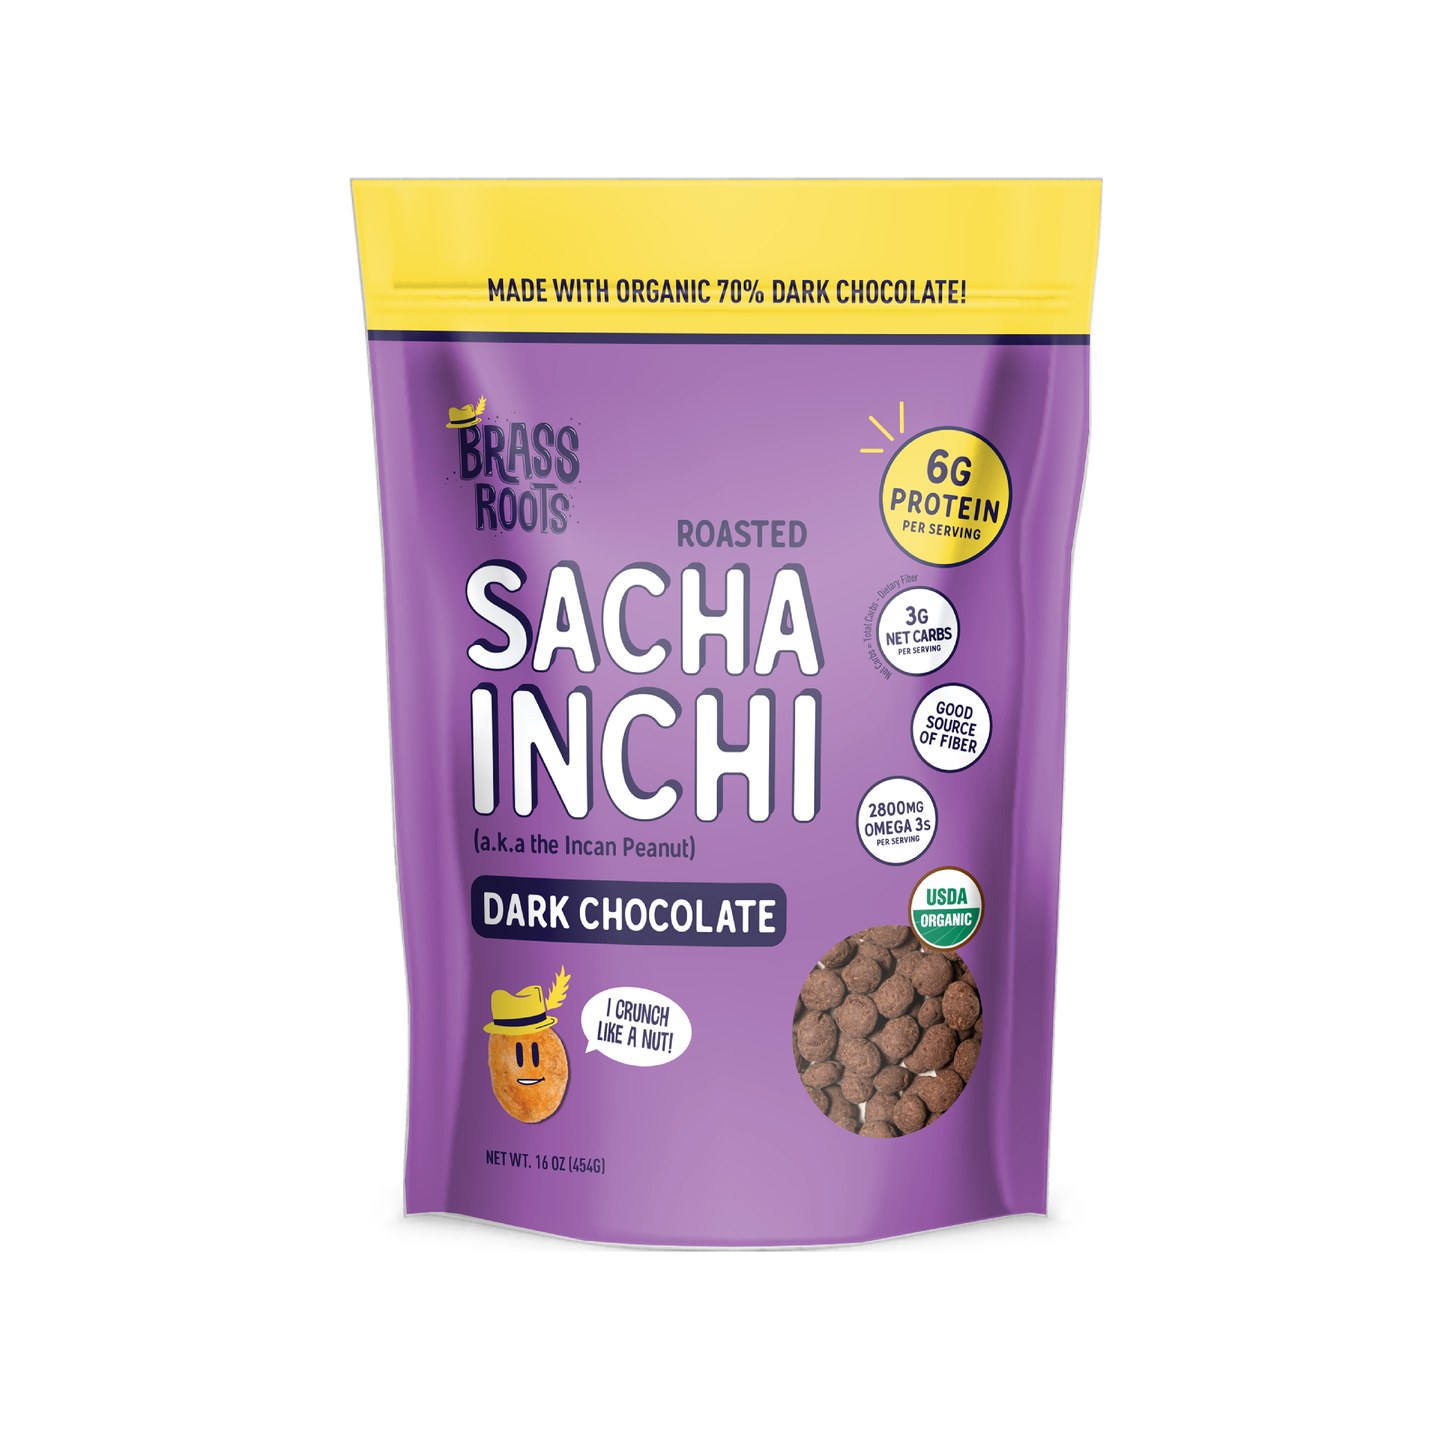 Roasted Sacha Inchi - Dark Chocolate Coated [16oz bag]